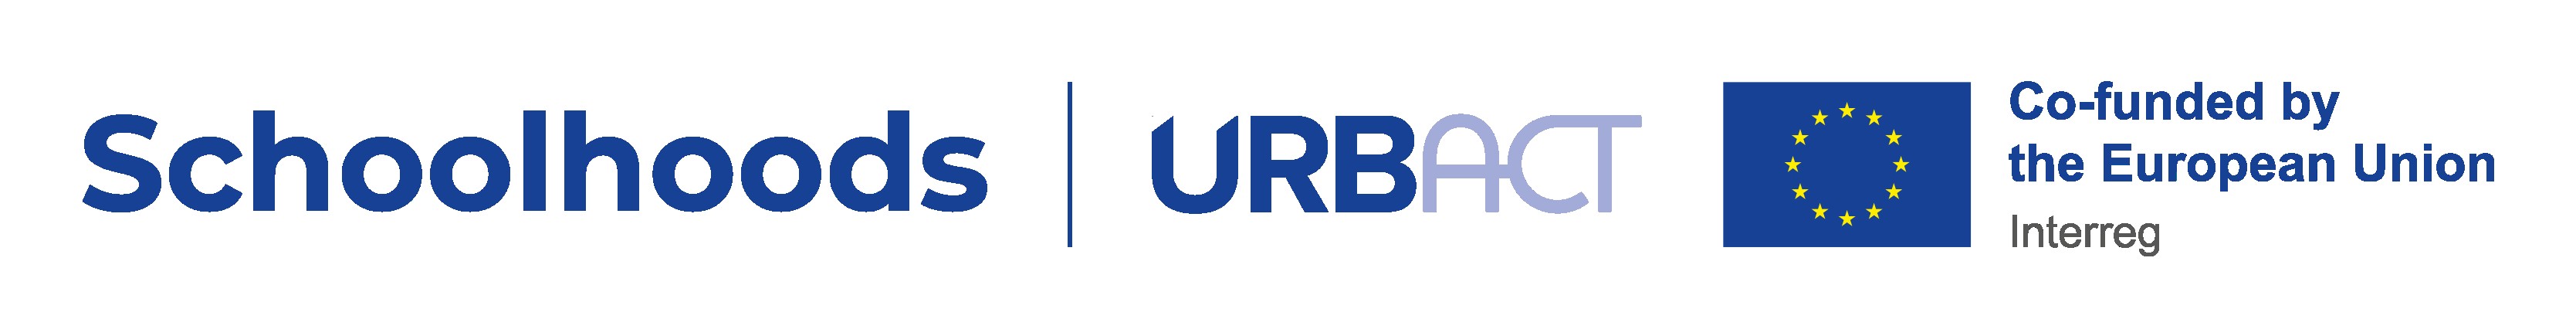 Belka przedstawiająca logotyp projektu Urbact Schoolhoods